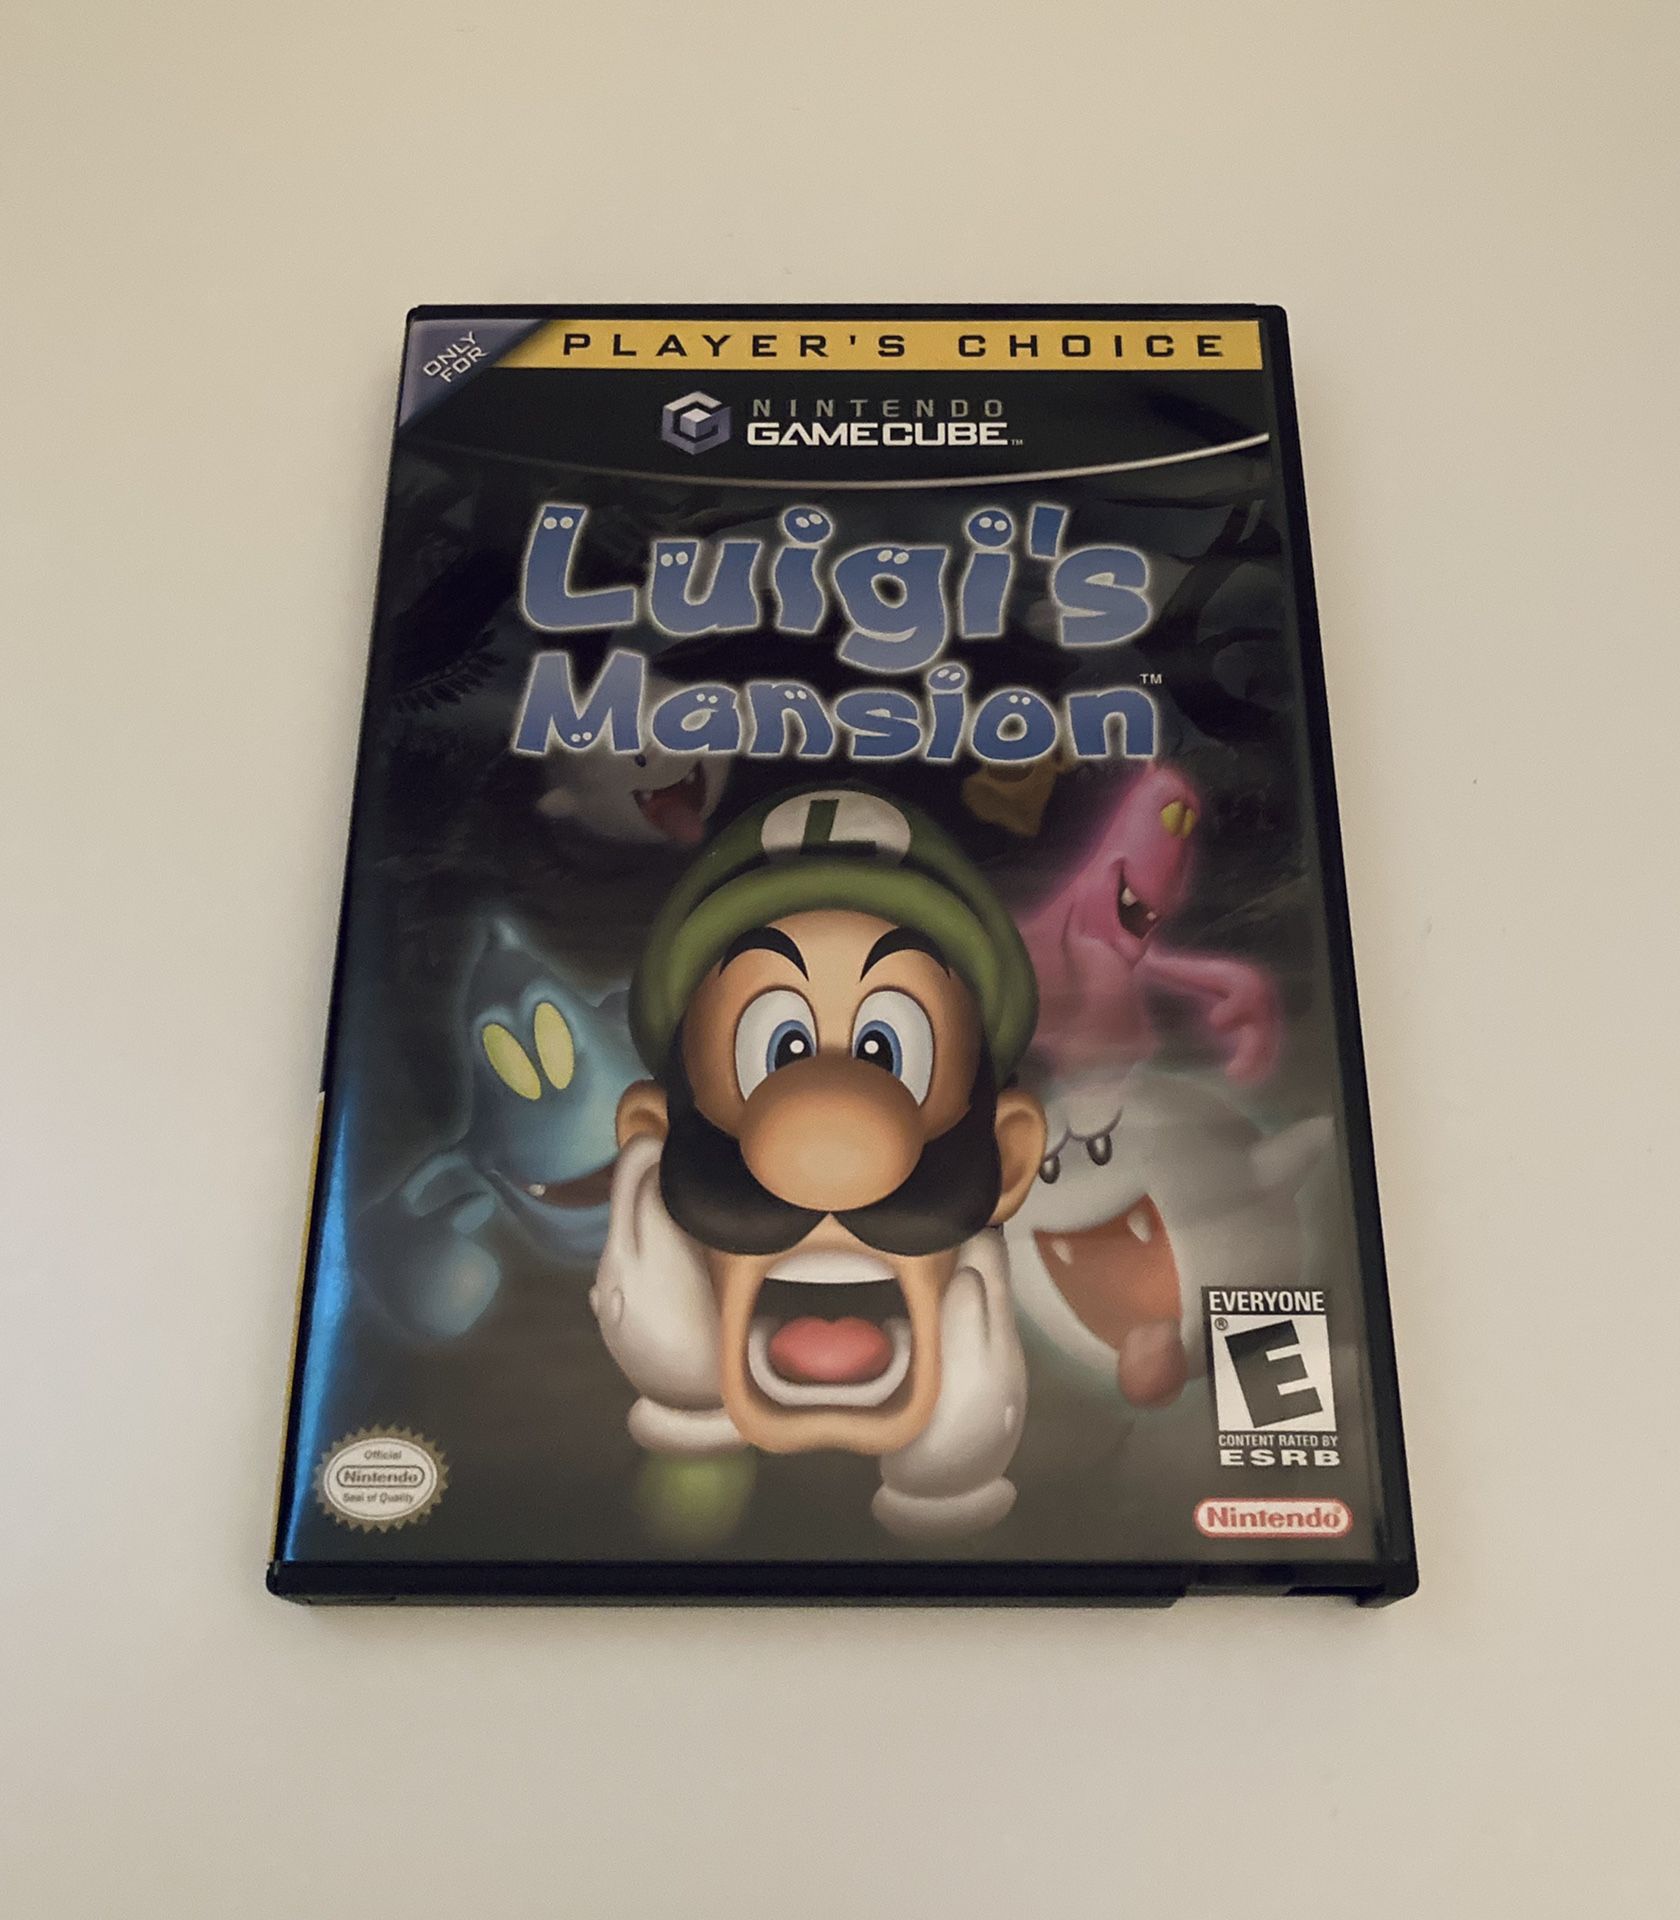 Player’s Choice Luigi’s Mansion | ( Nintendo GameCube, 2001 )